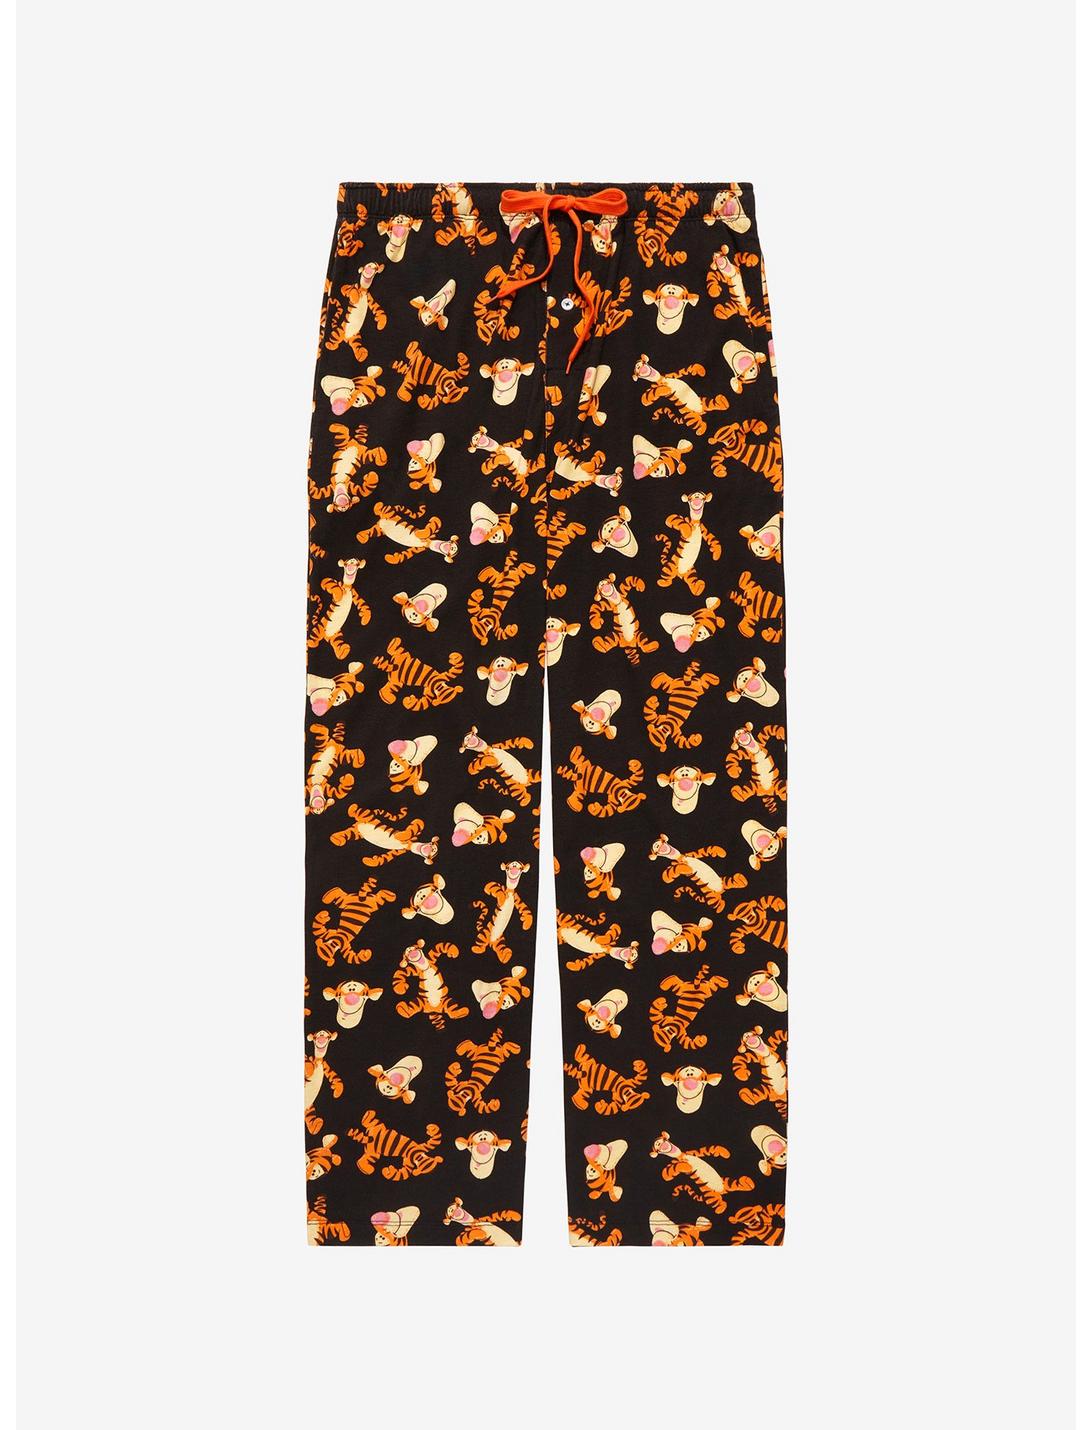 Disney Winnie the Pooh Tigger Allover Print Sleep Pants - BoxLunch Exclusive, BLACK, hi-res